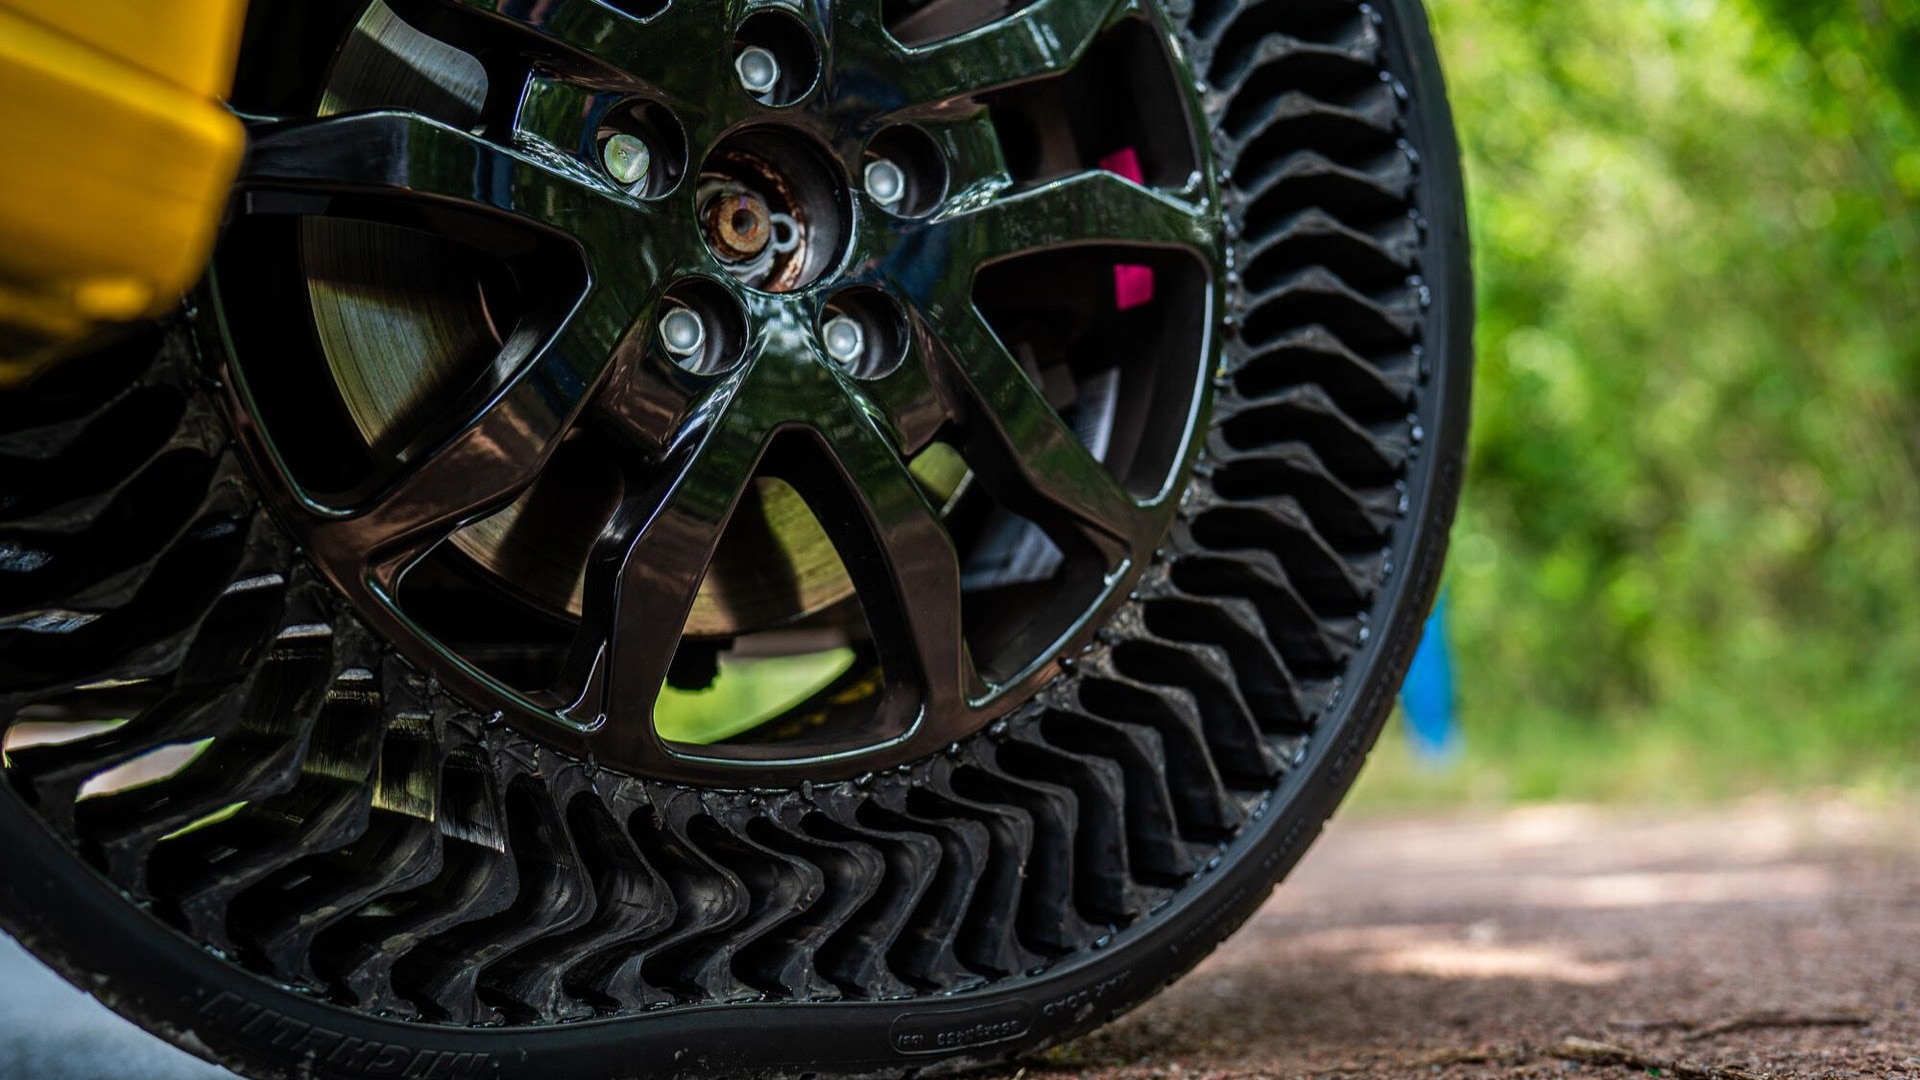 Michelin Uptis airless prototype tires